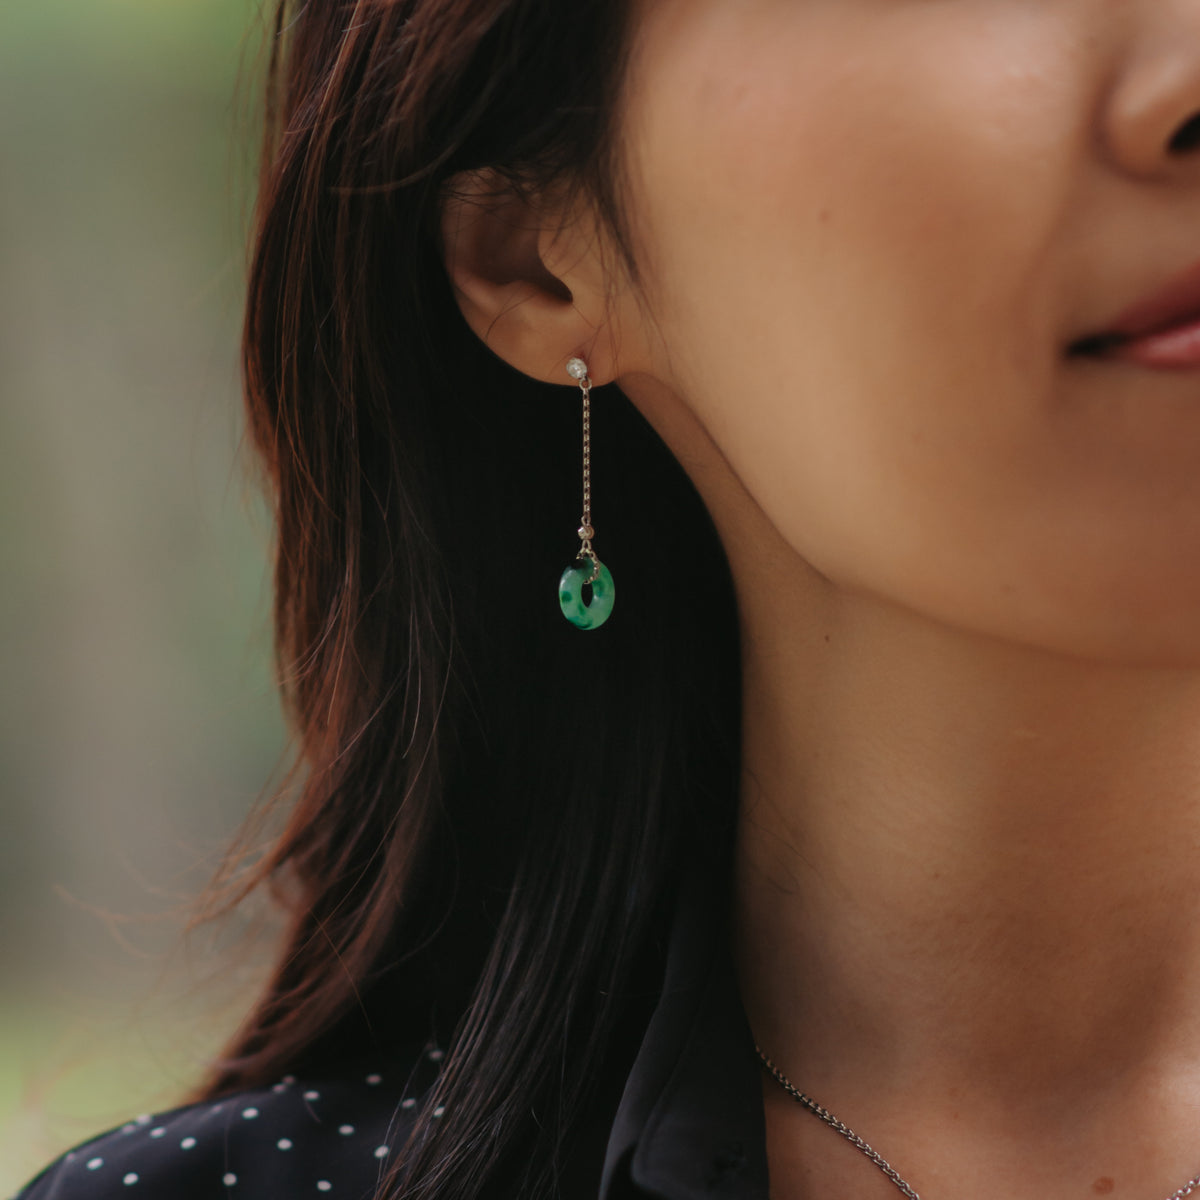 Green jade ring earrings with single stud diamond